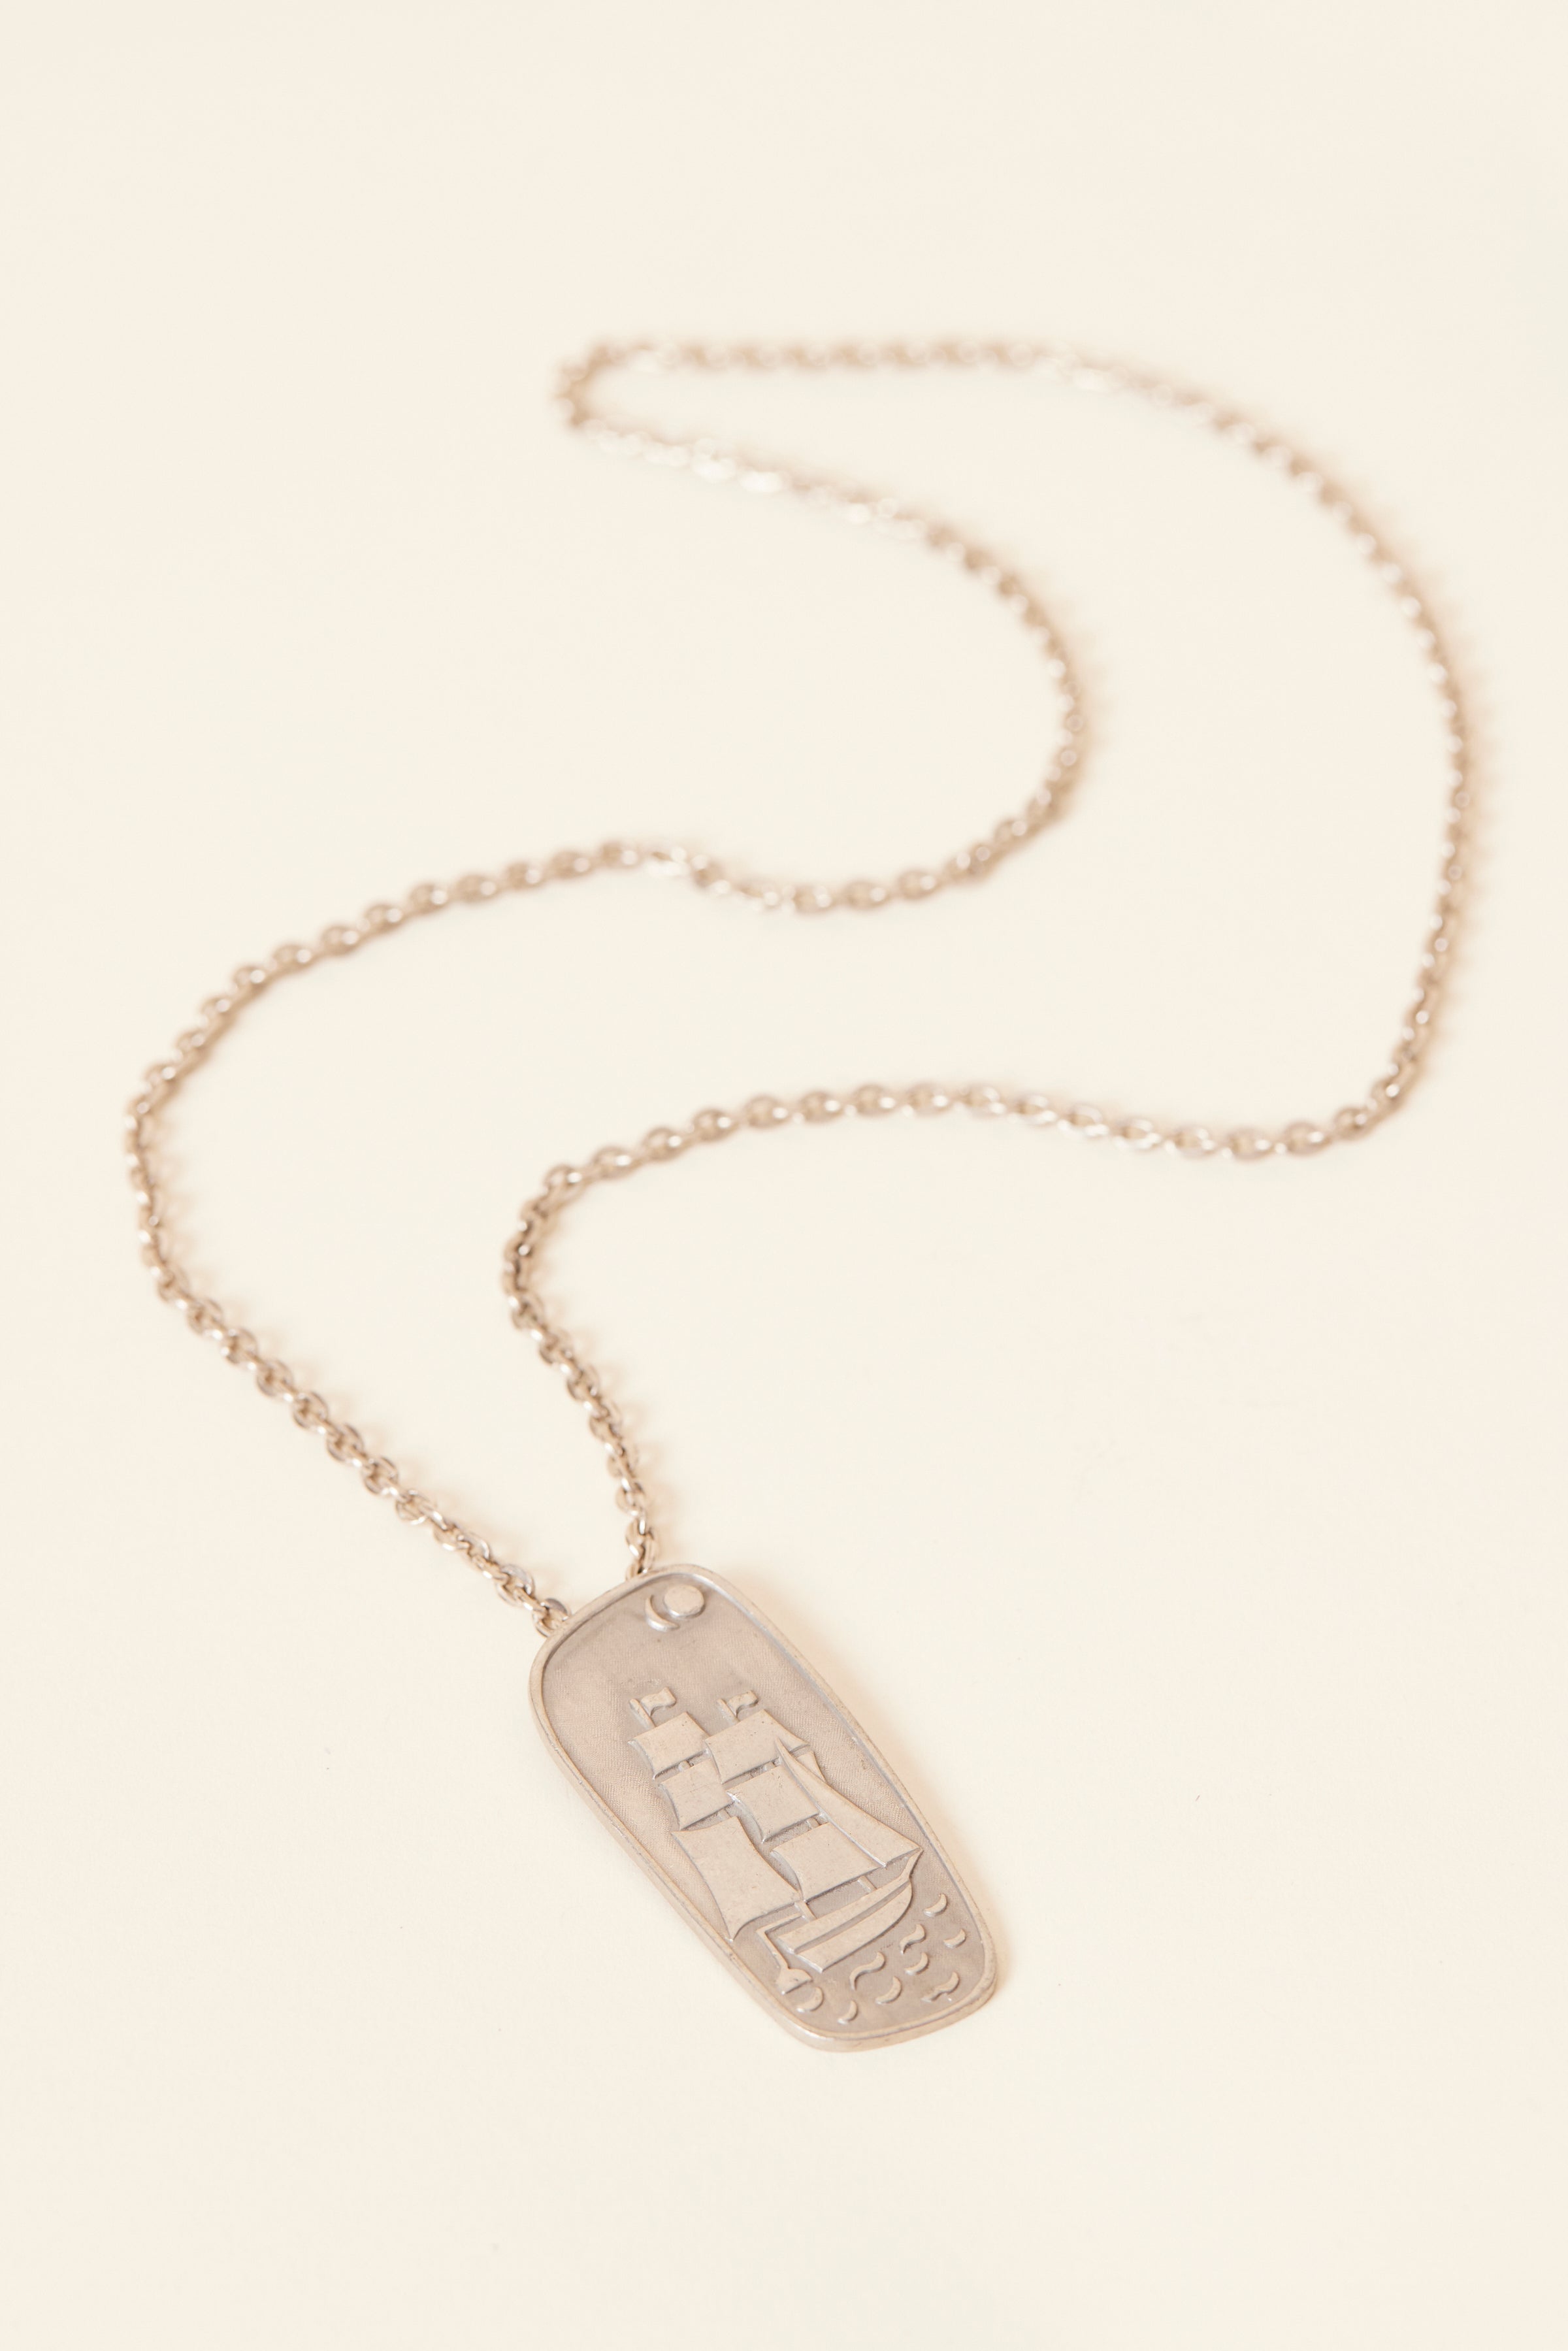 Georg Jensen/Astrid Fog, a sterling silver necklace. Model no. 122. -  Bukowskis